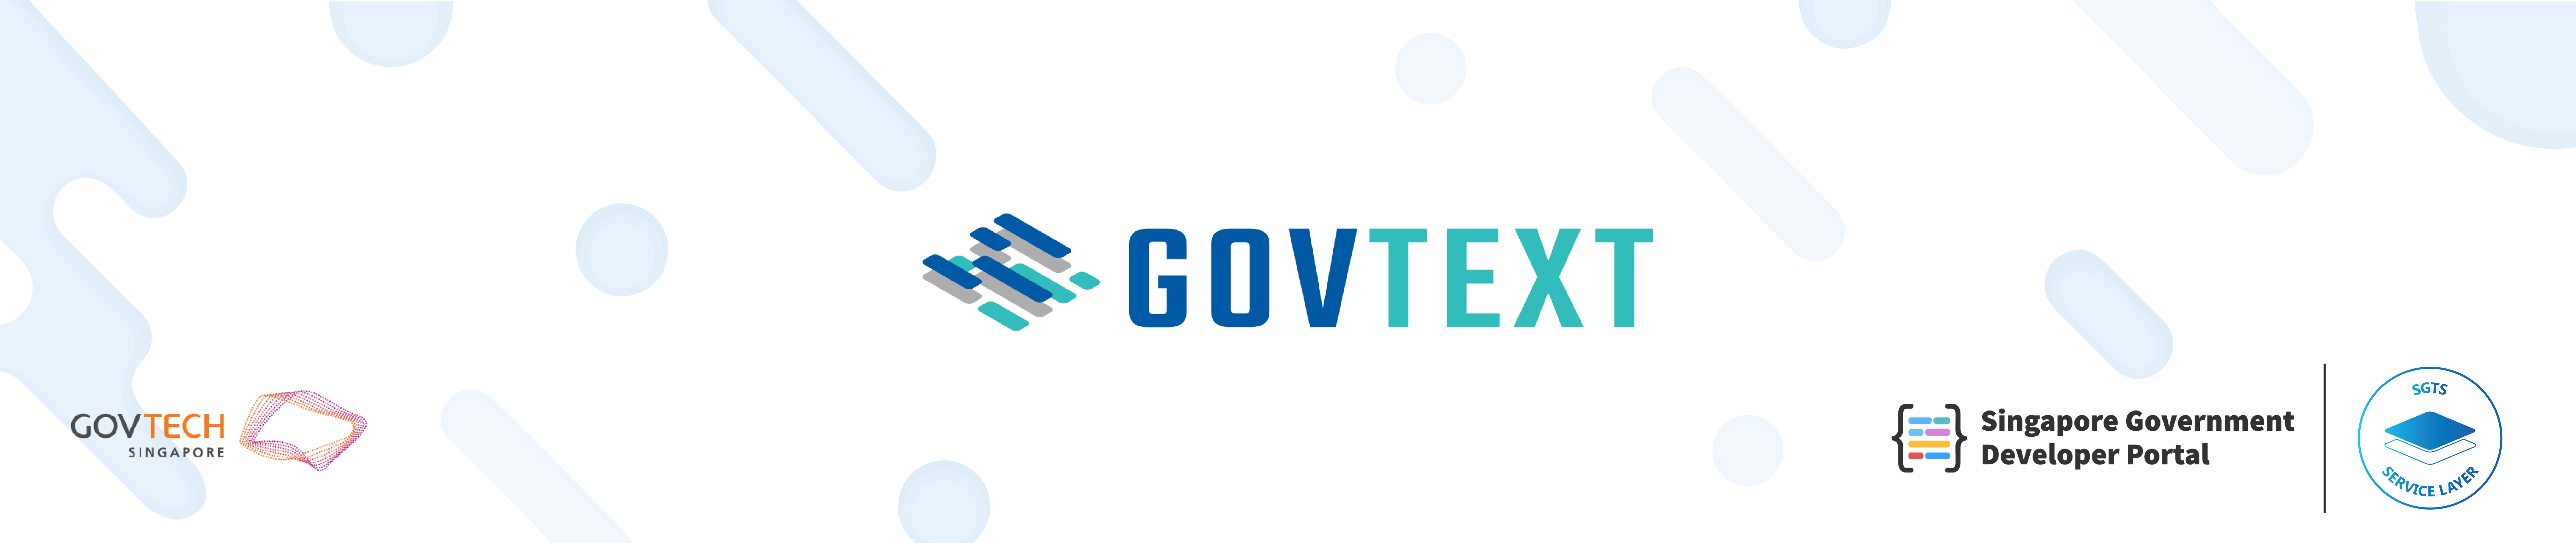 GovText header banner